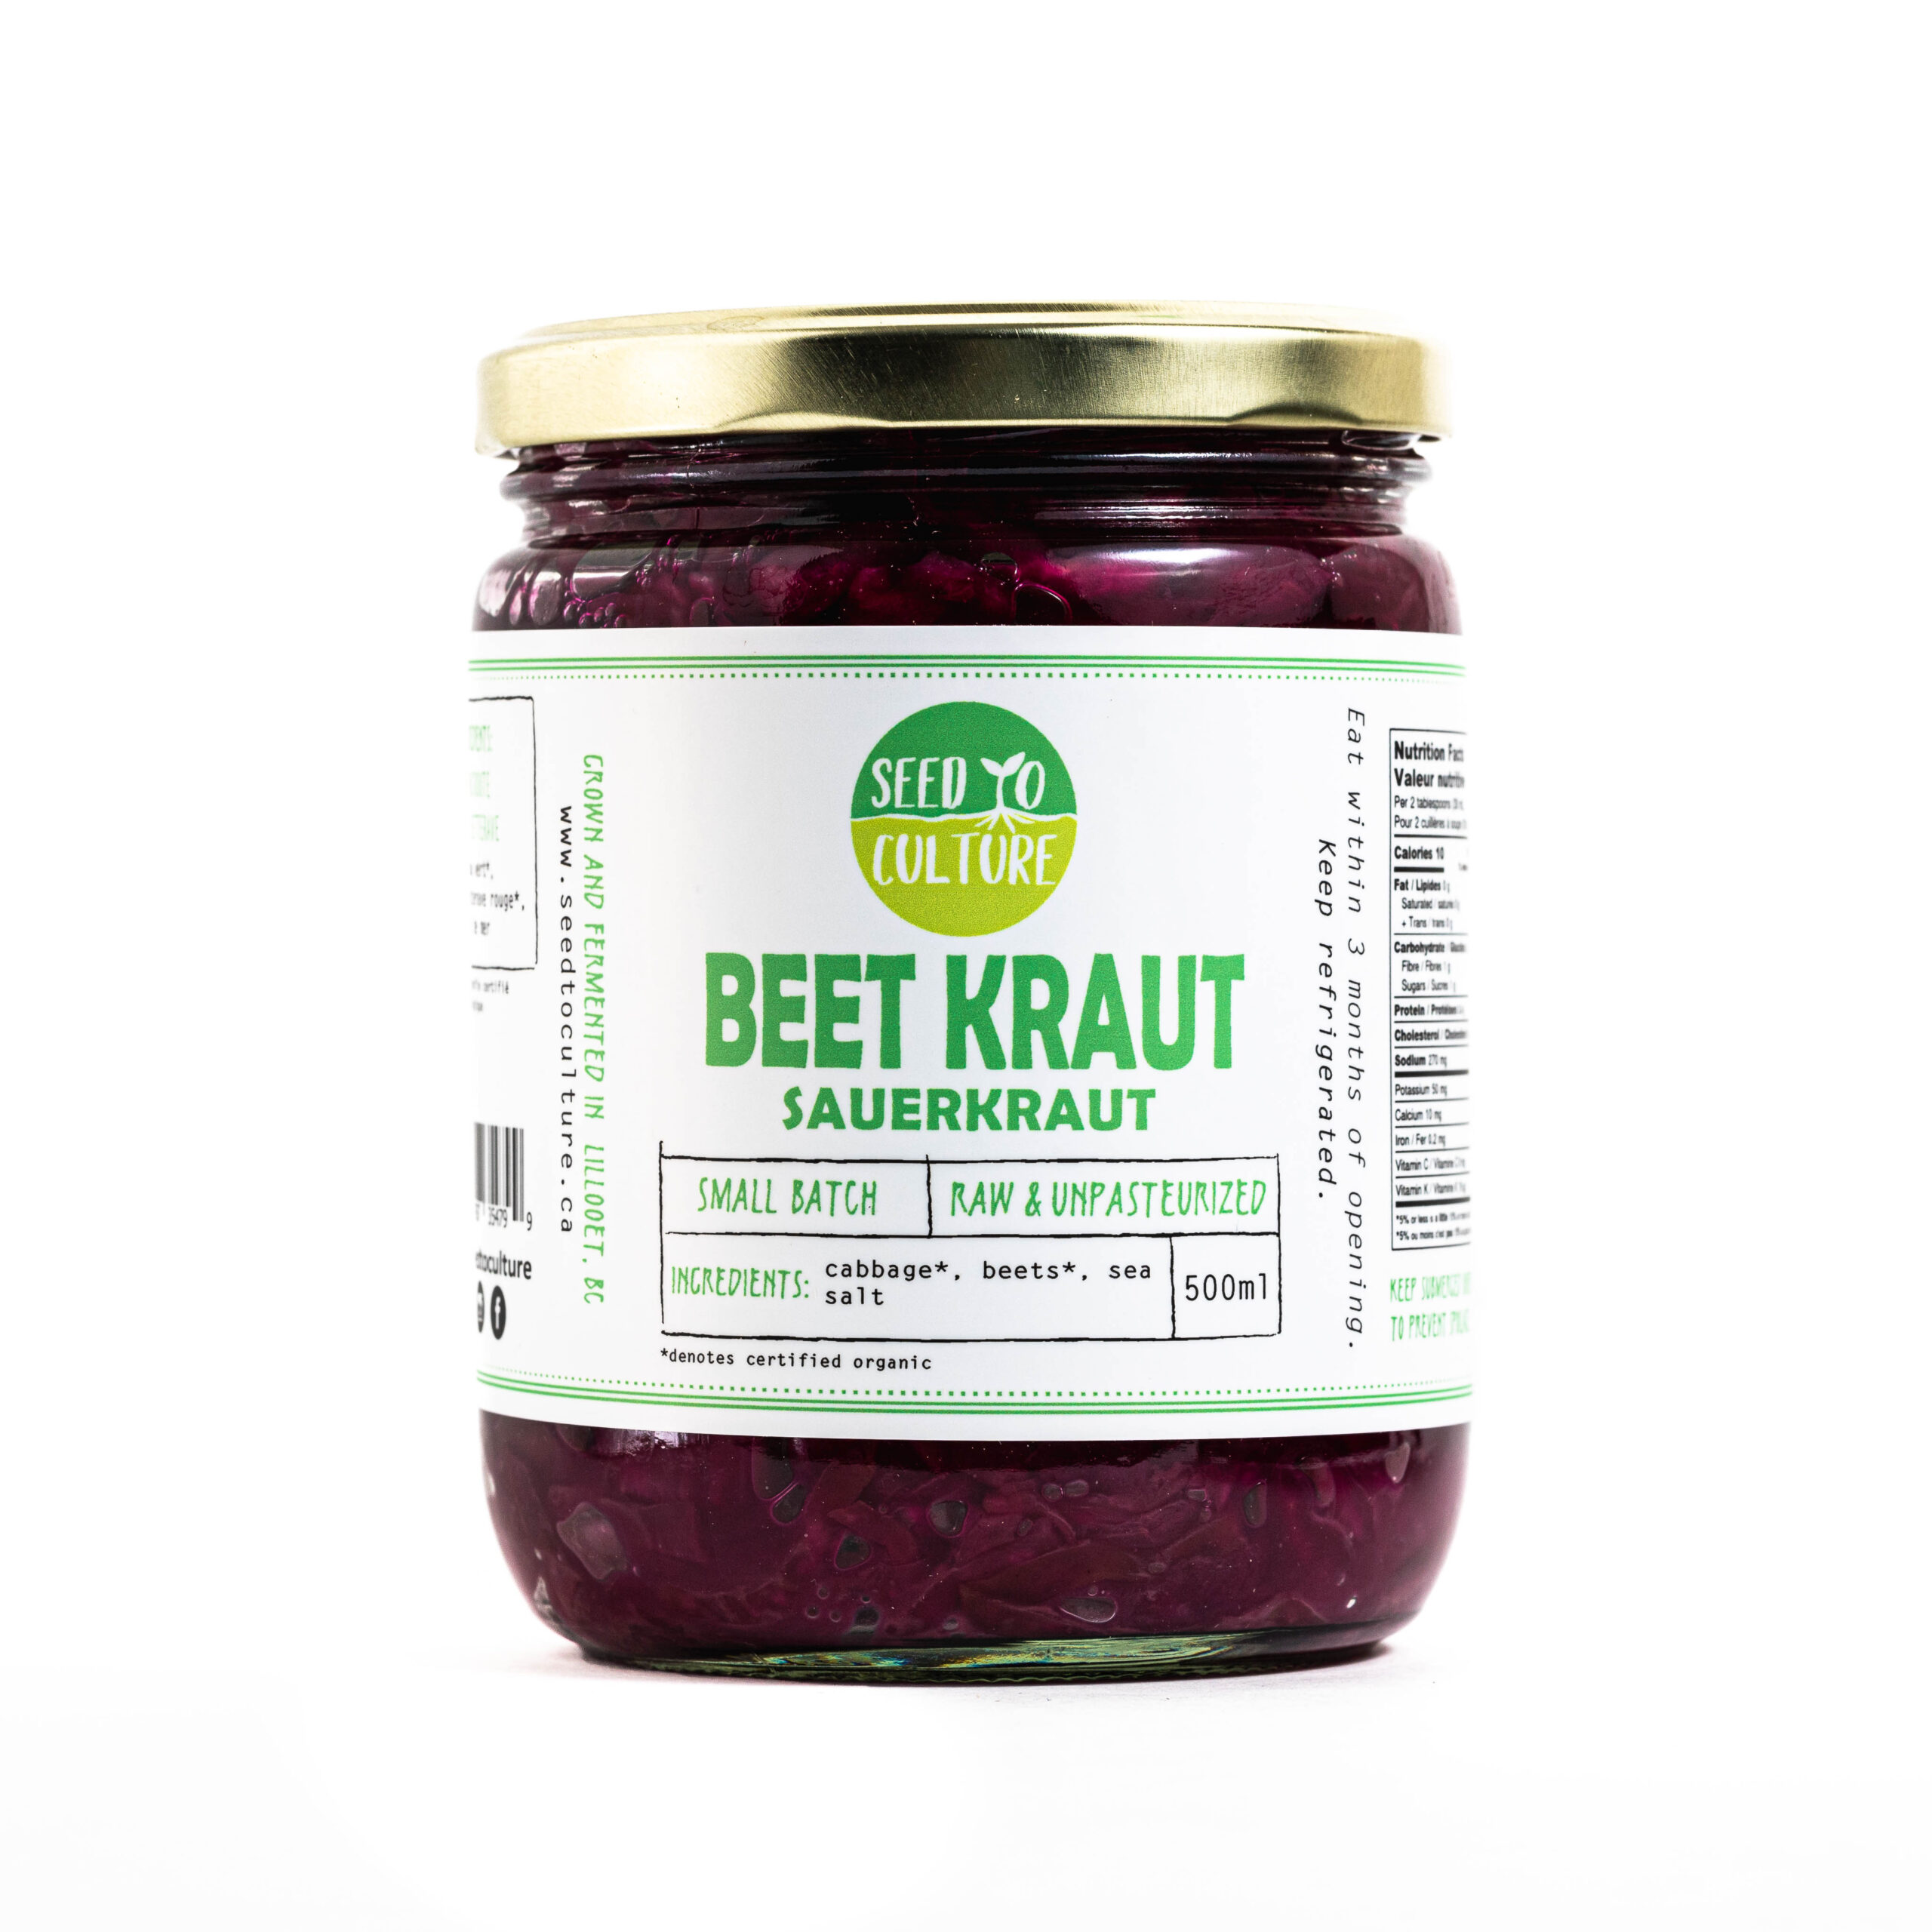 Beet Kraut Sauerkraut